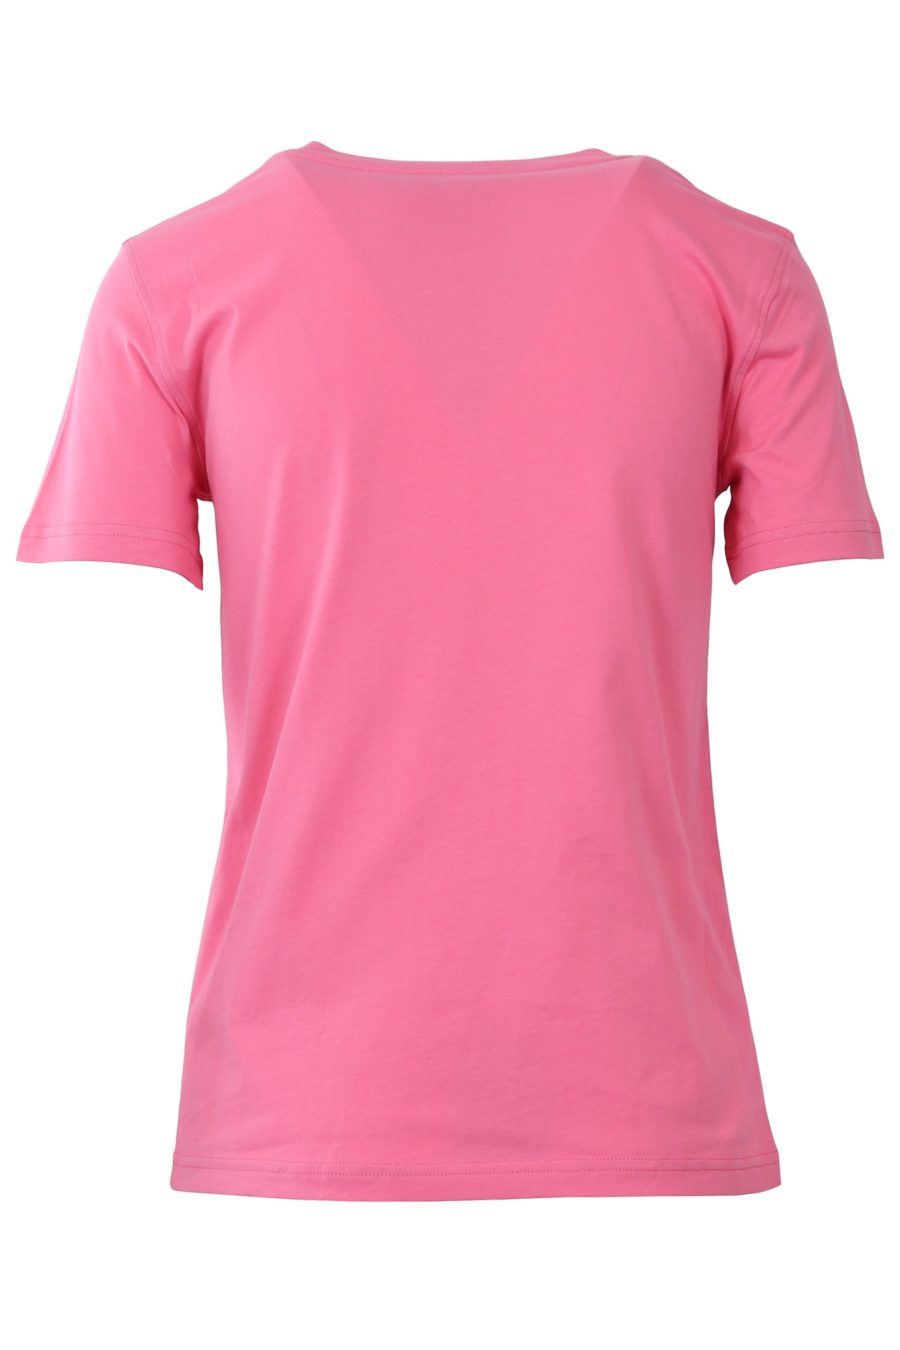 T-shirt Moschino Couture rosa mit großem Logo milano - 3b895d682028876c904850f7ec6f3b26d00d3154